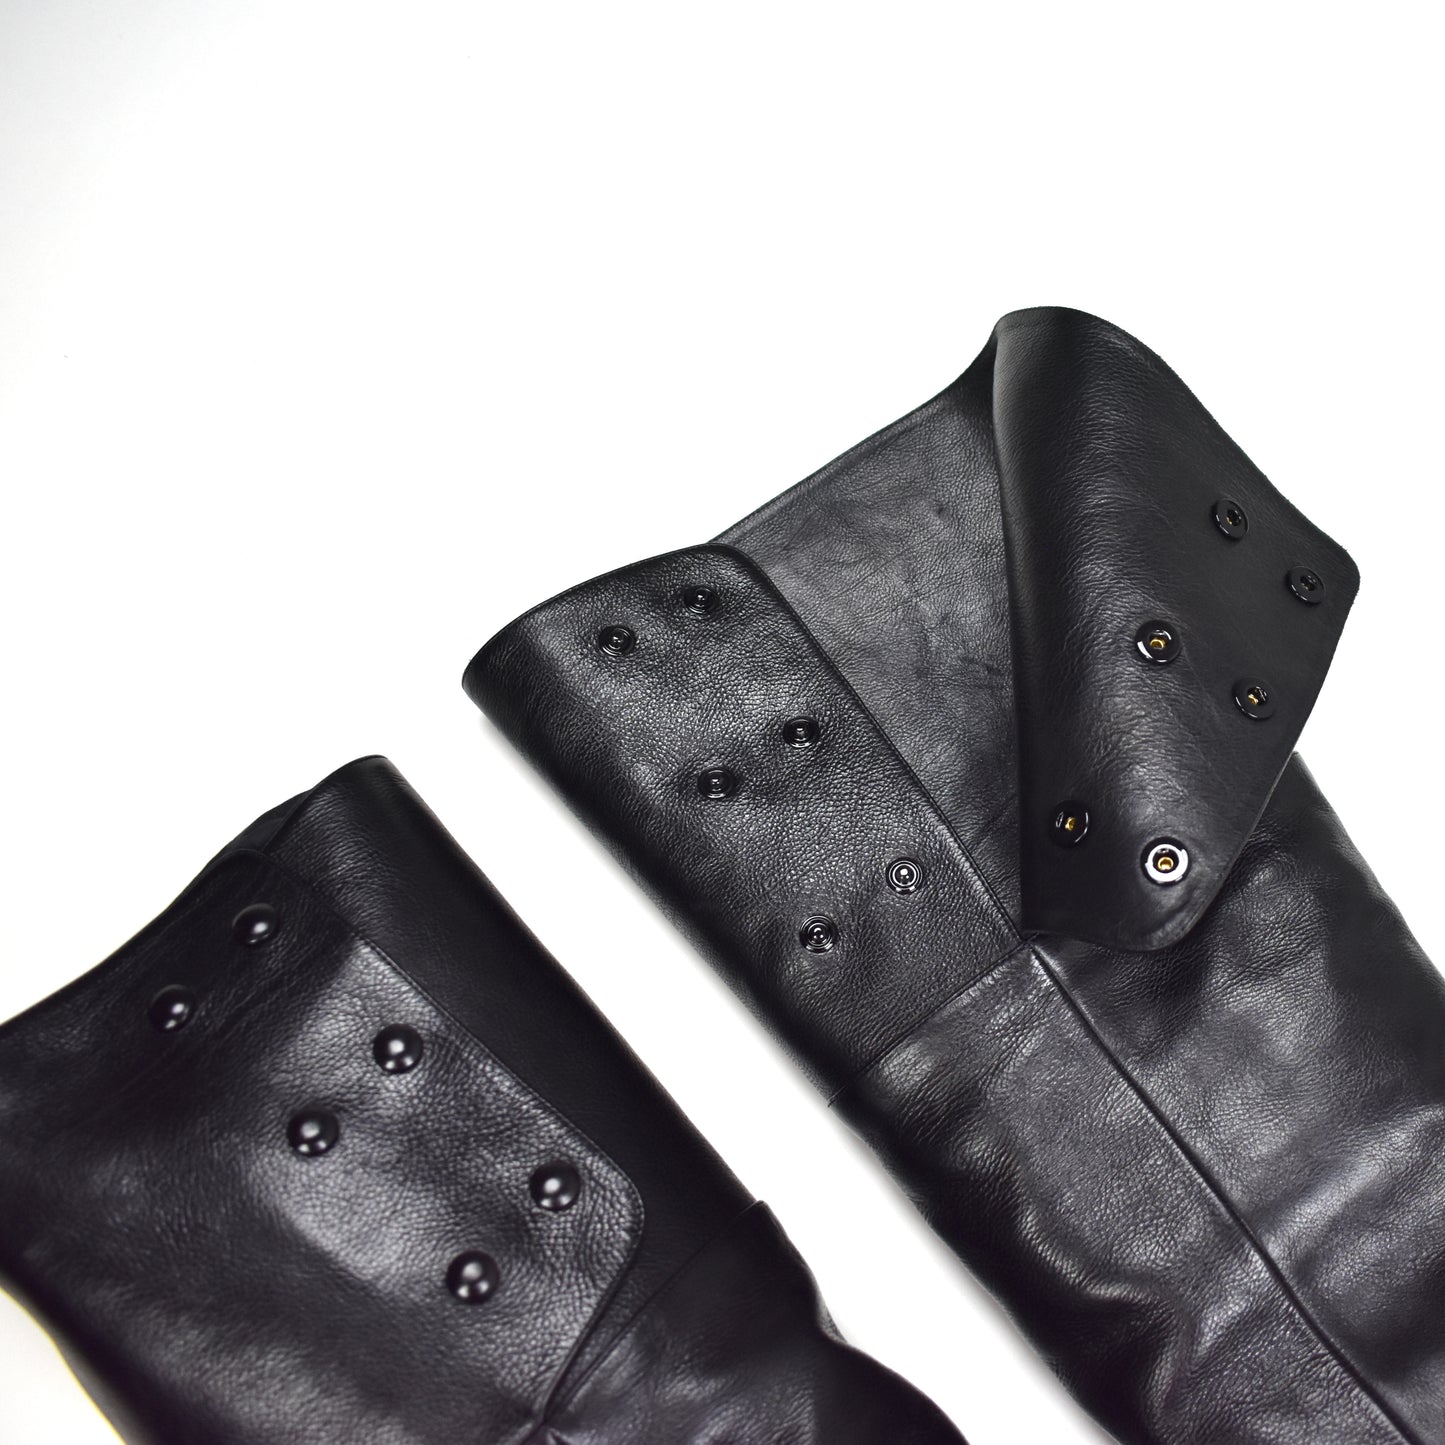 Saint Laurent - Black Calf Leather Jane 105 OTK Boots